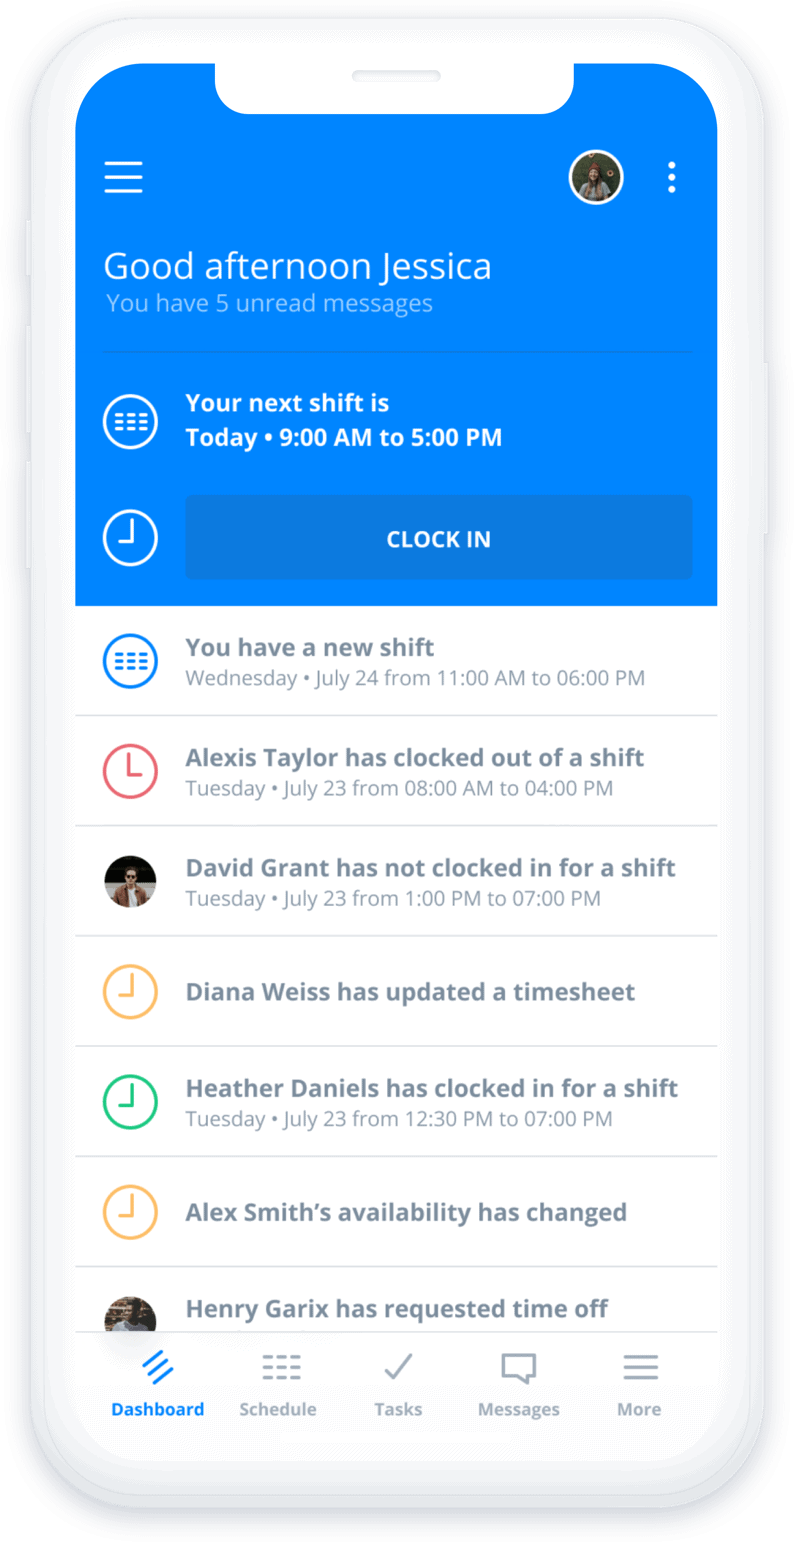 Sling employee dashboard on mobile app